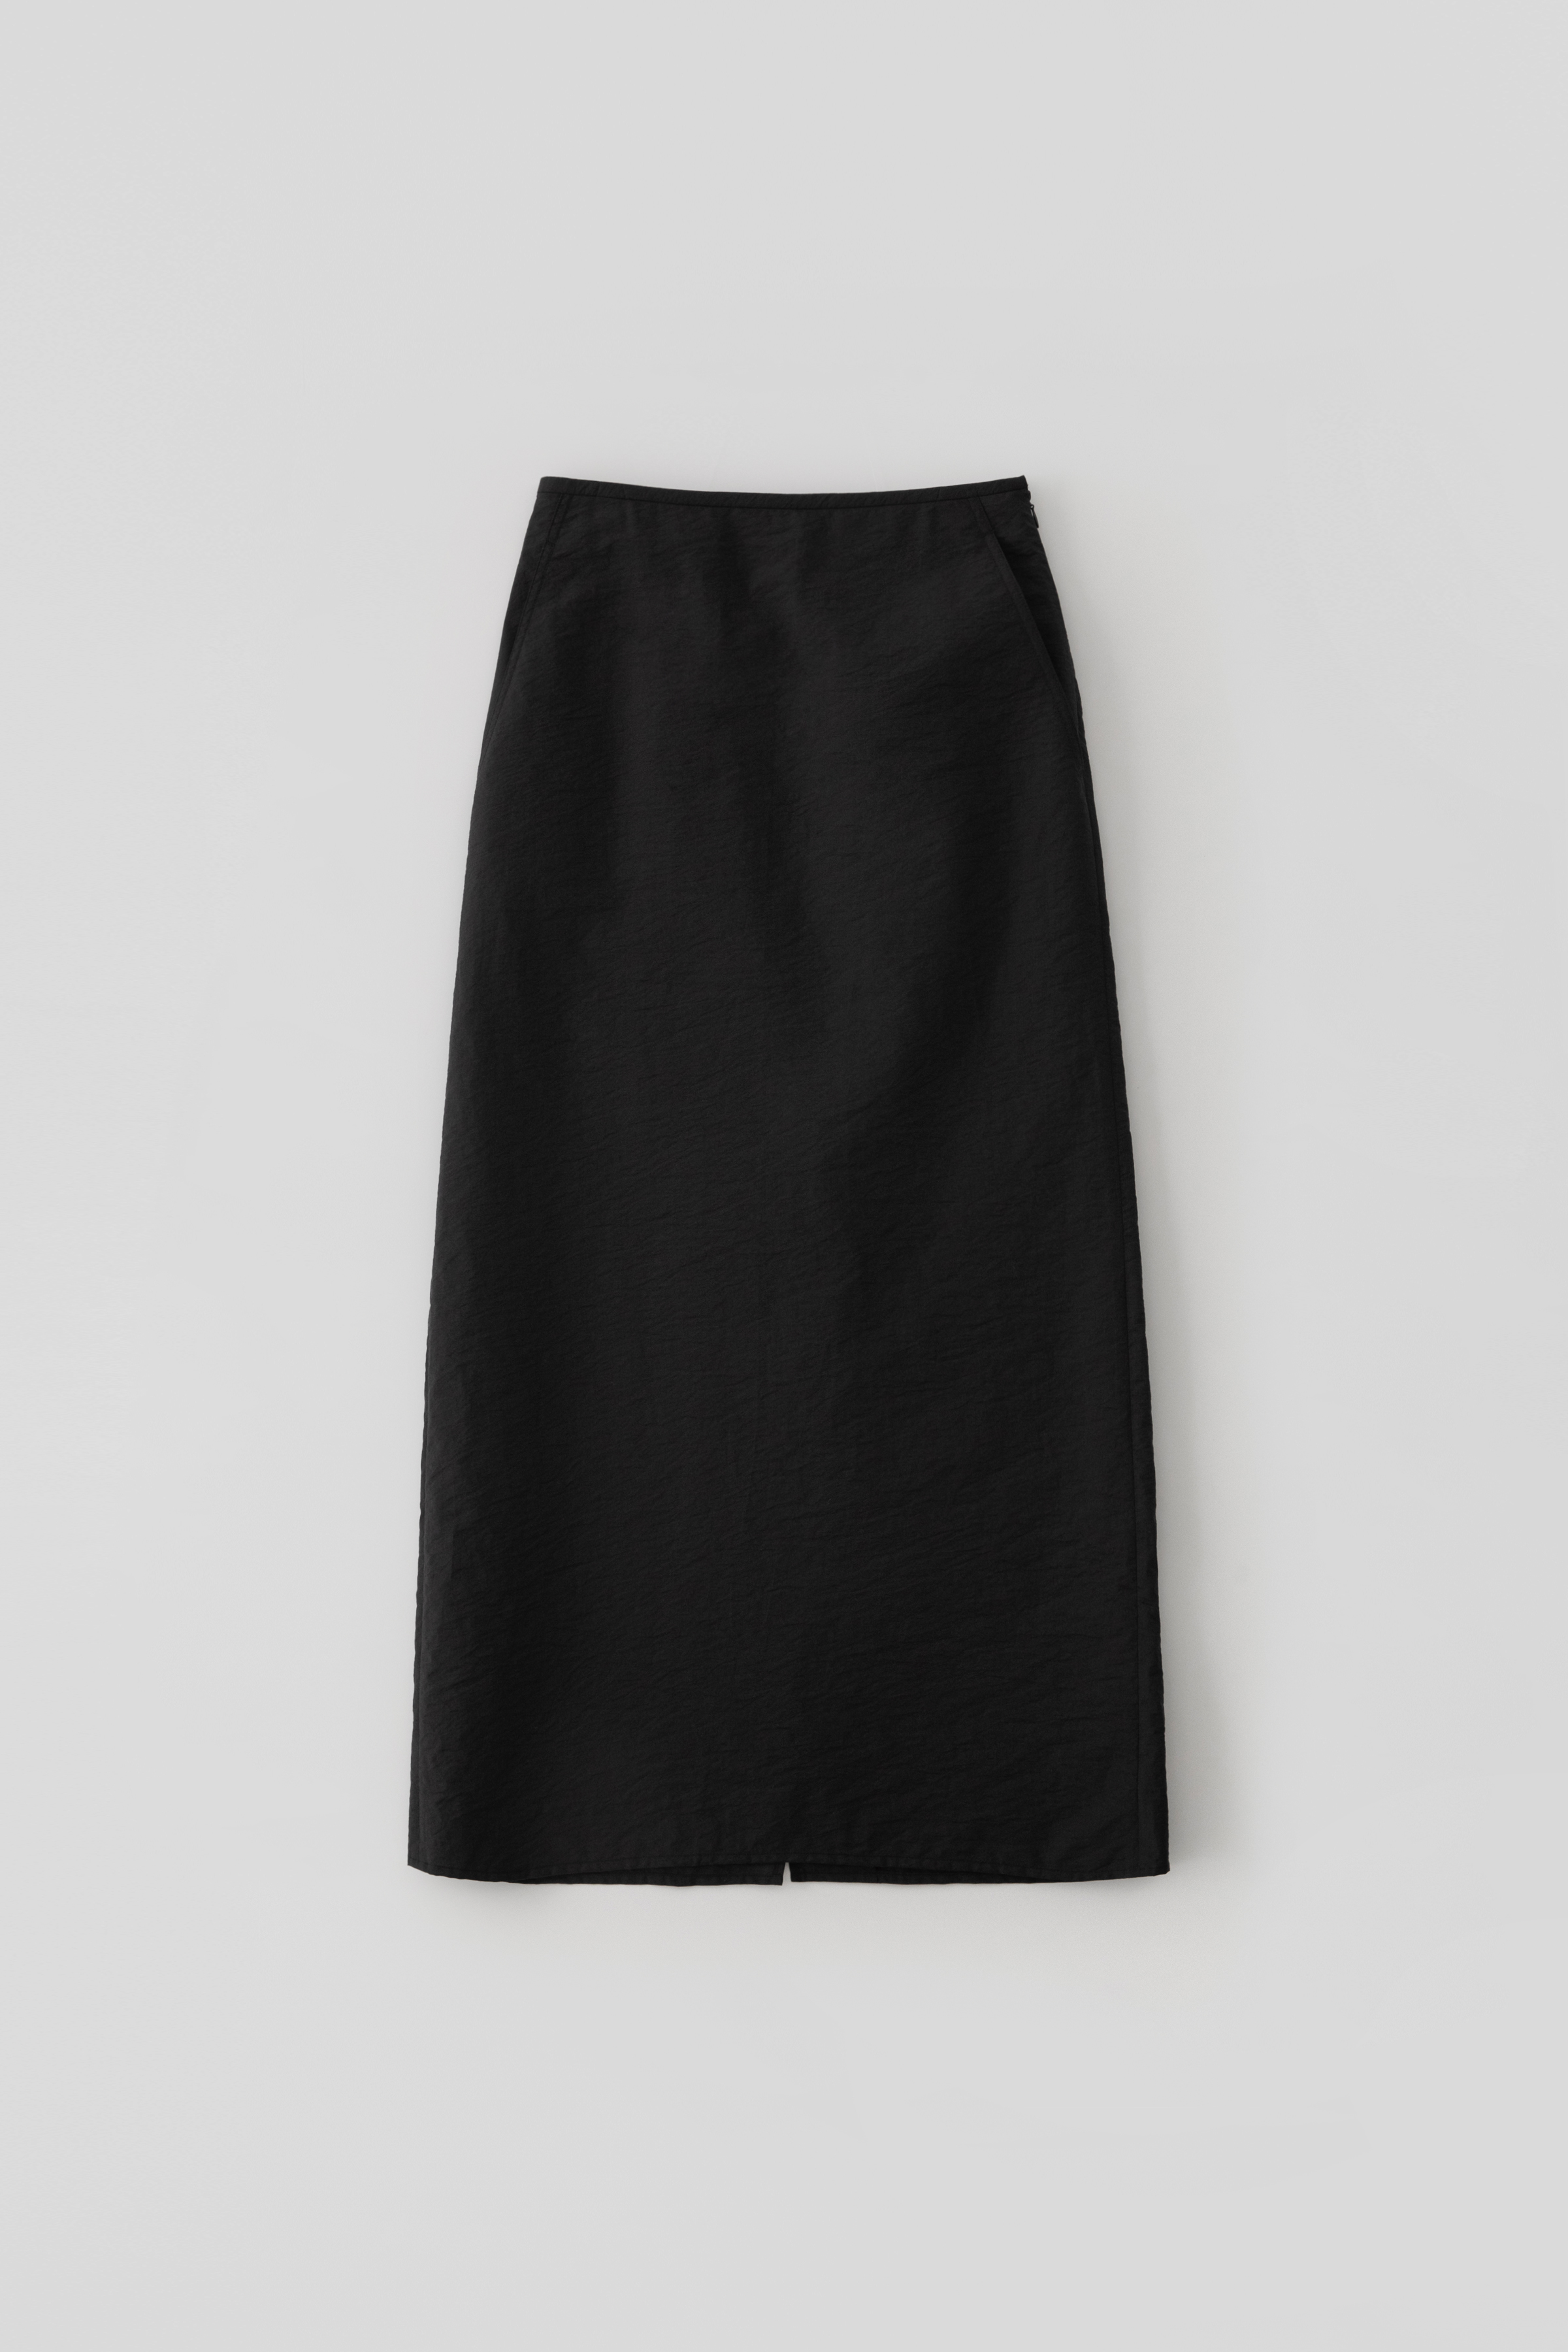 Crunch Maxi Skirt_Black